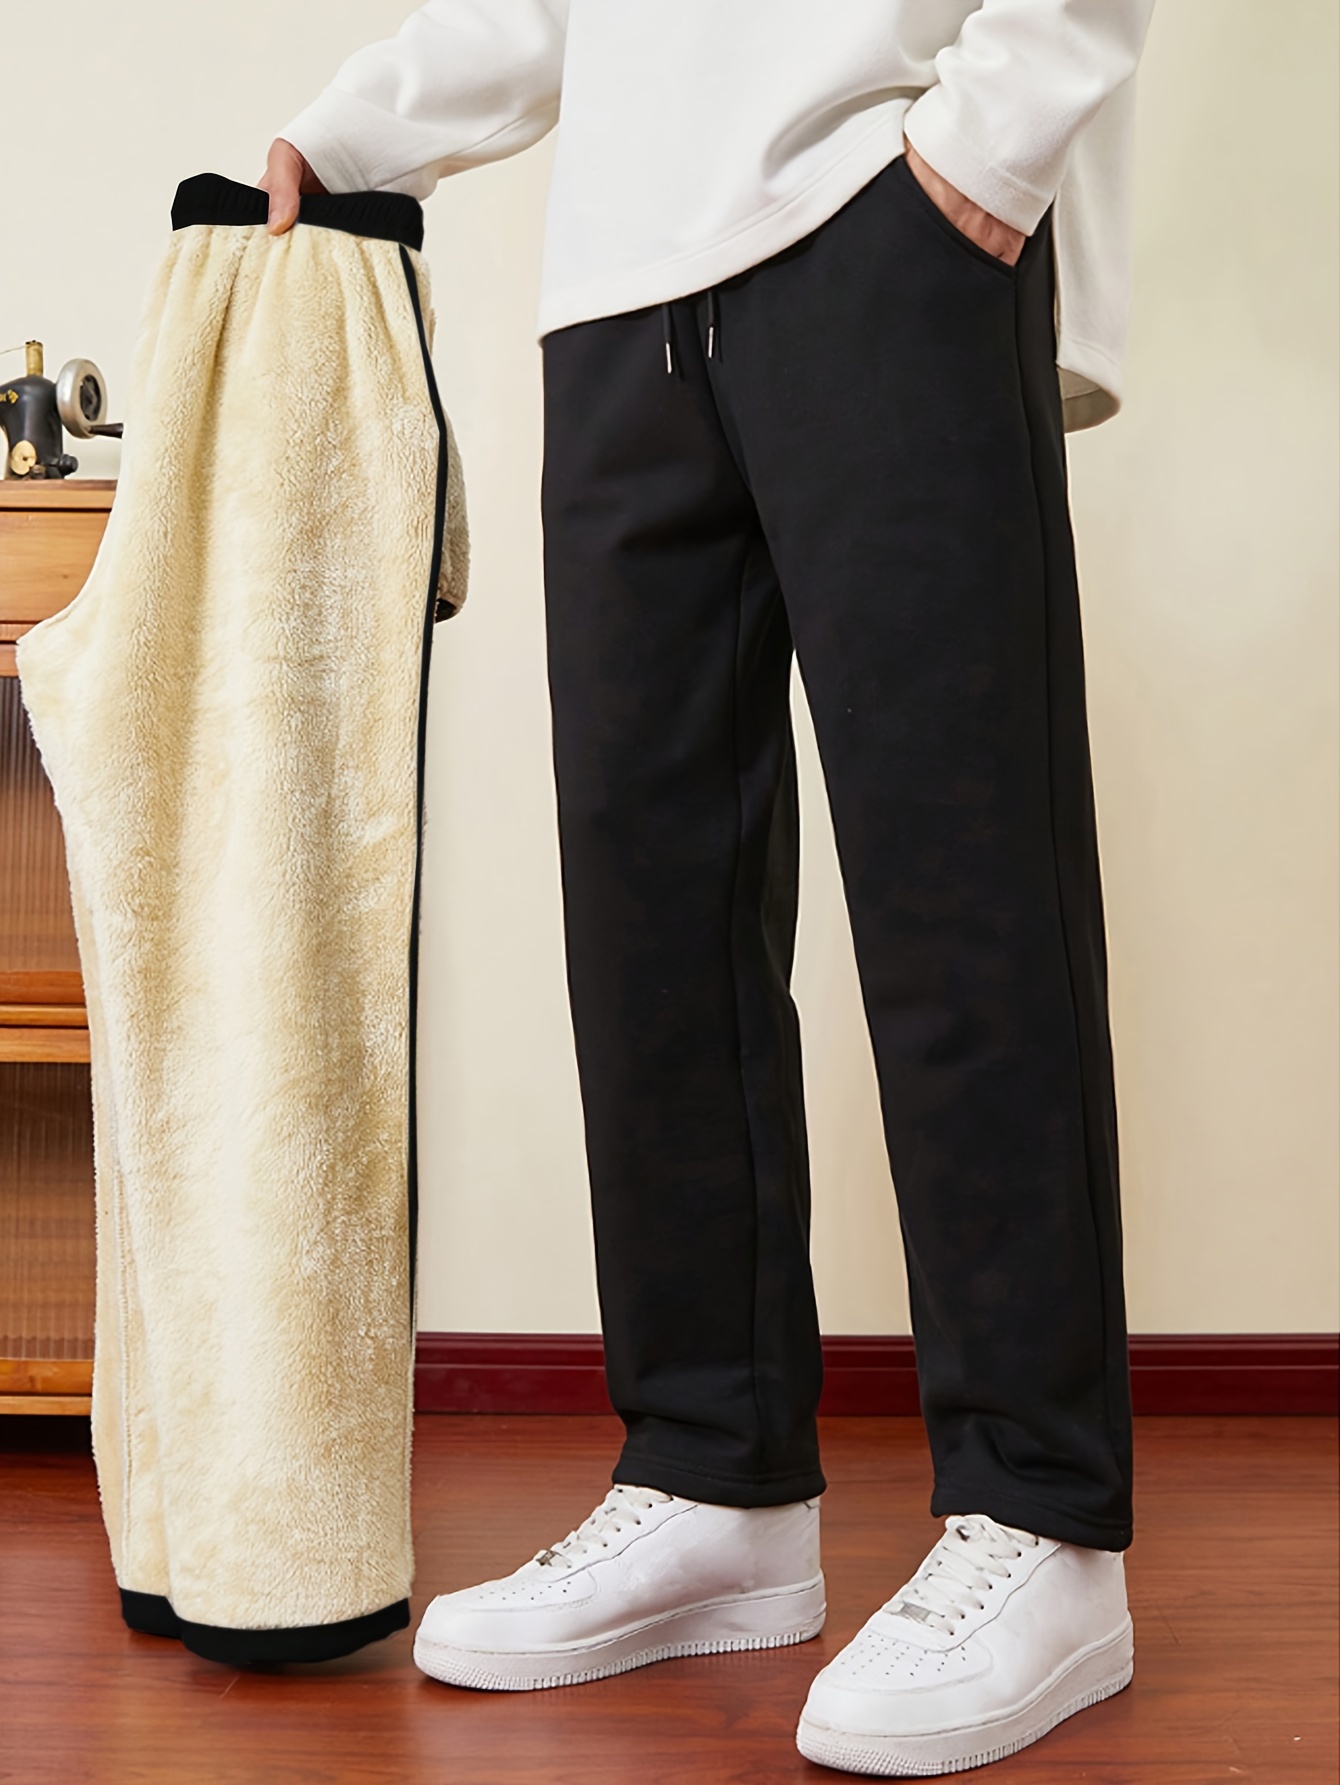 Men's Winter Warm Fleece Lined Pants, Outdoor Sports Camping, Men's  Straight Pants